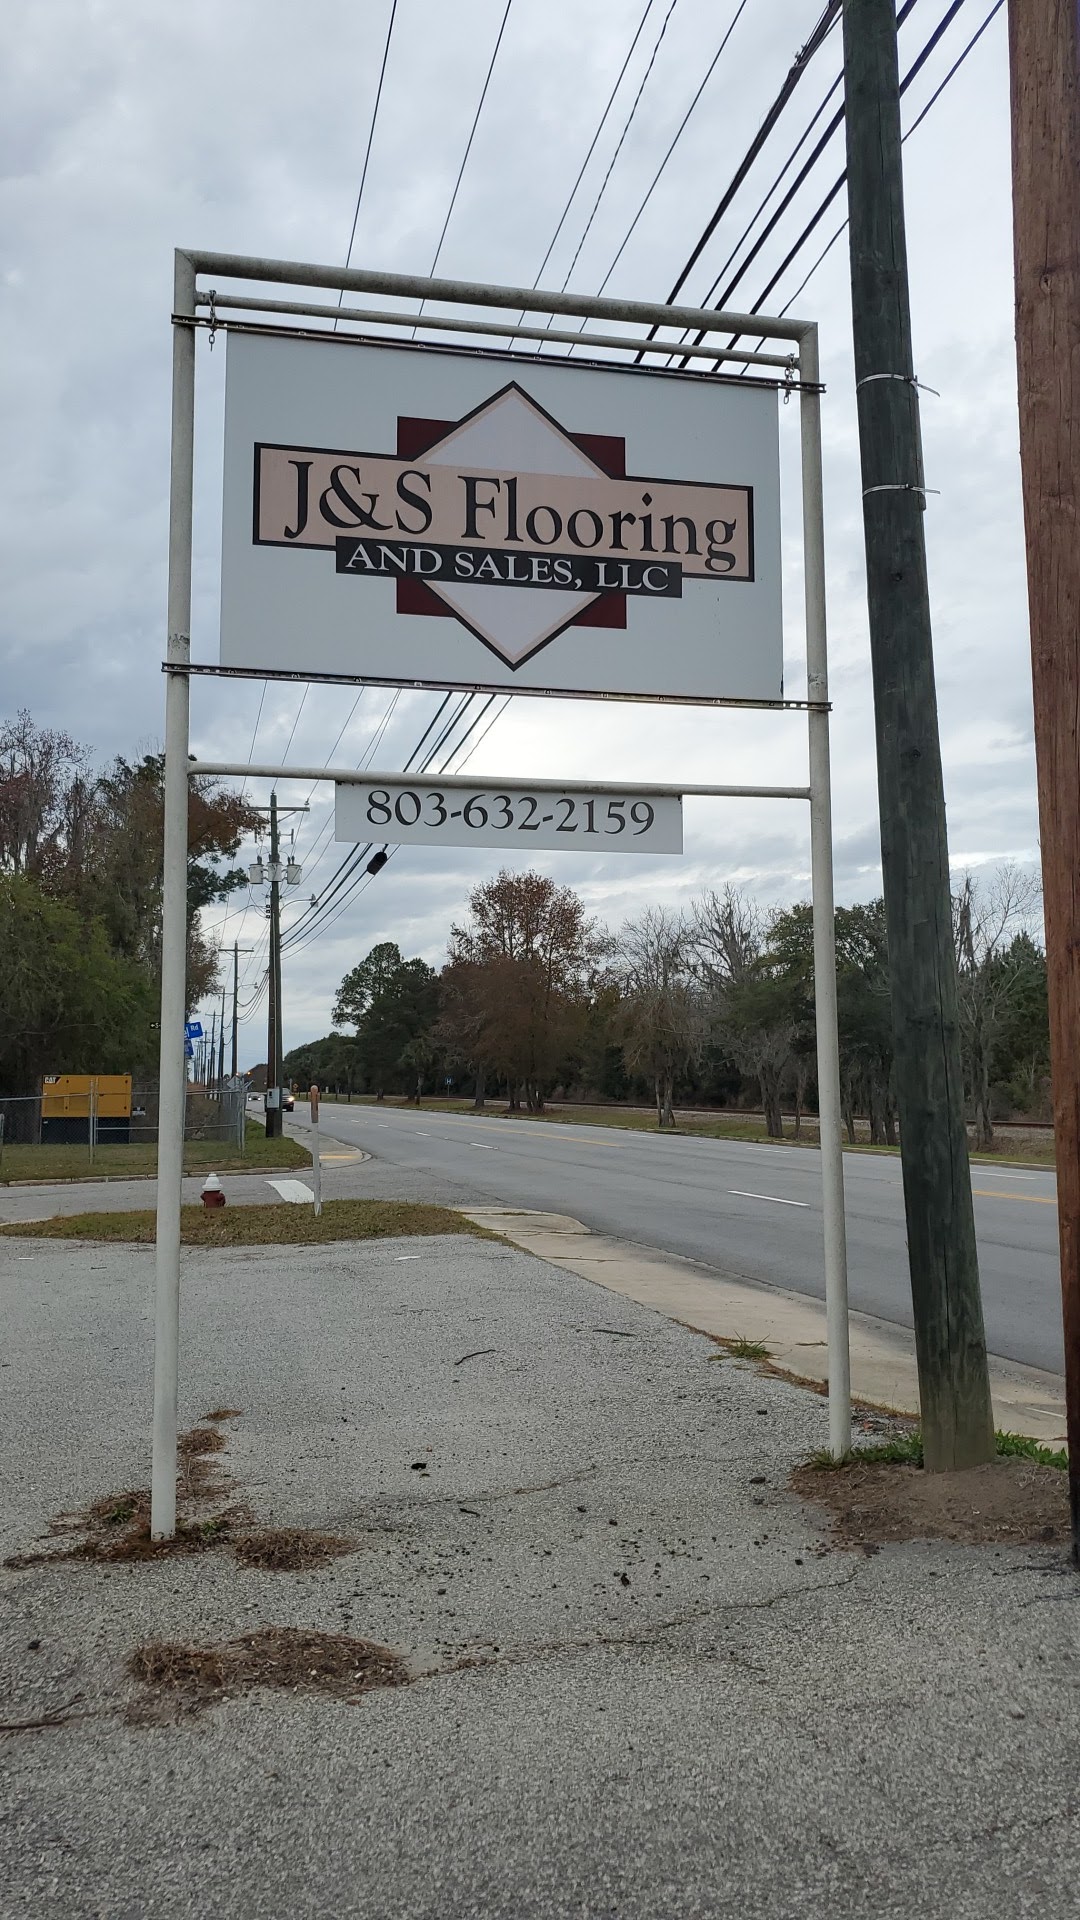 J&S Flooring and Sales, LLC 1319 Allendale-Fairfax Hwy, Fairfax South Carolina 29827